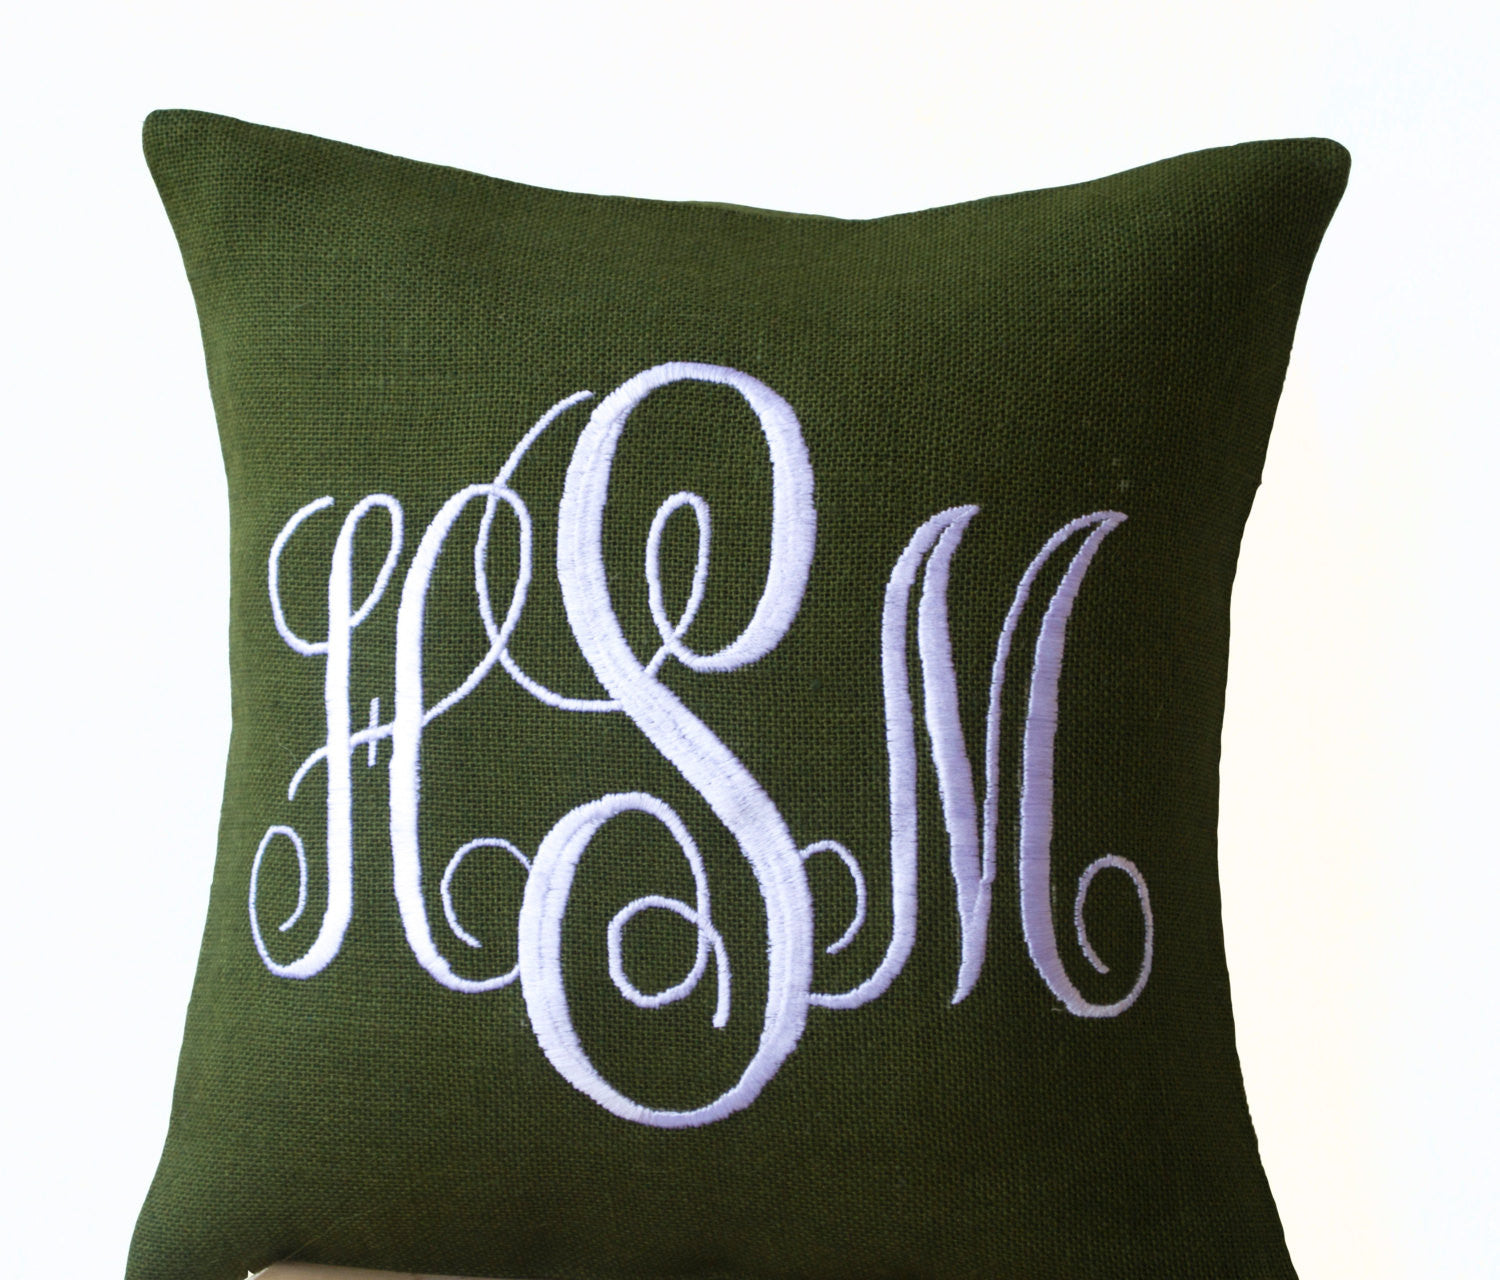 Handmade green burlap pillows with monogram